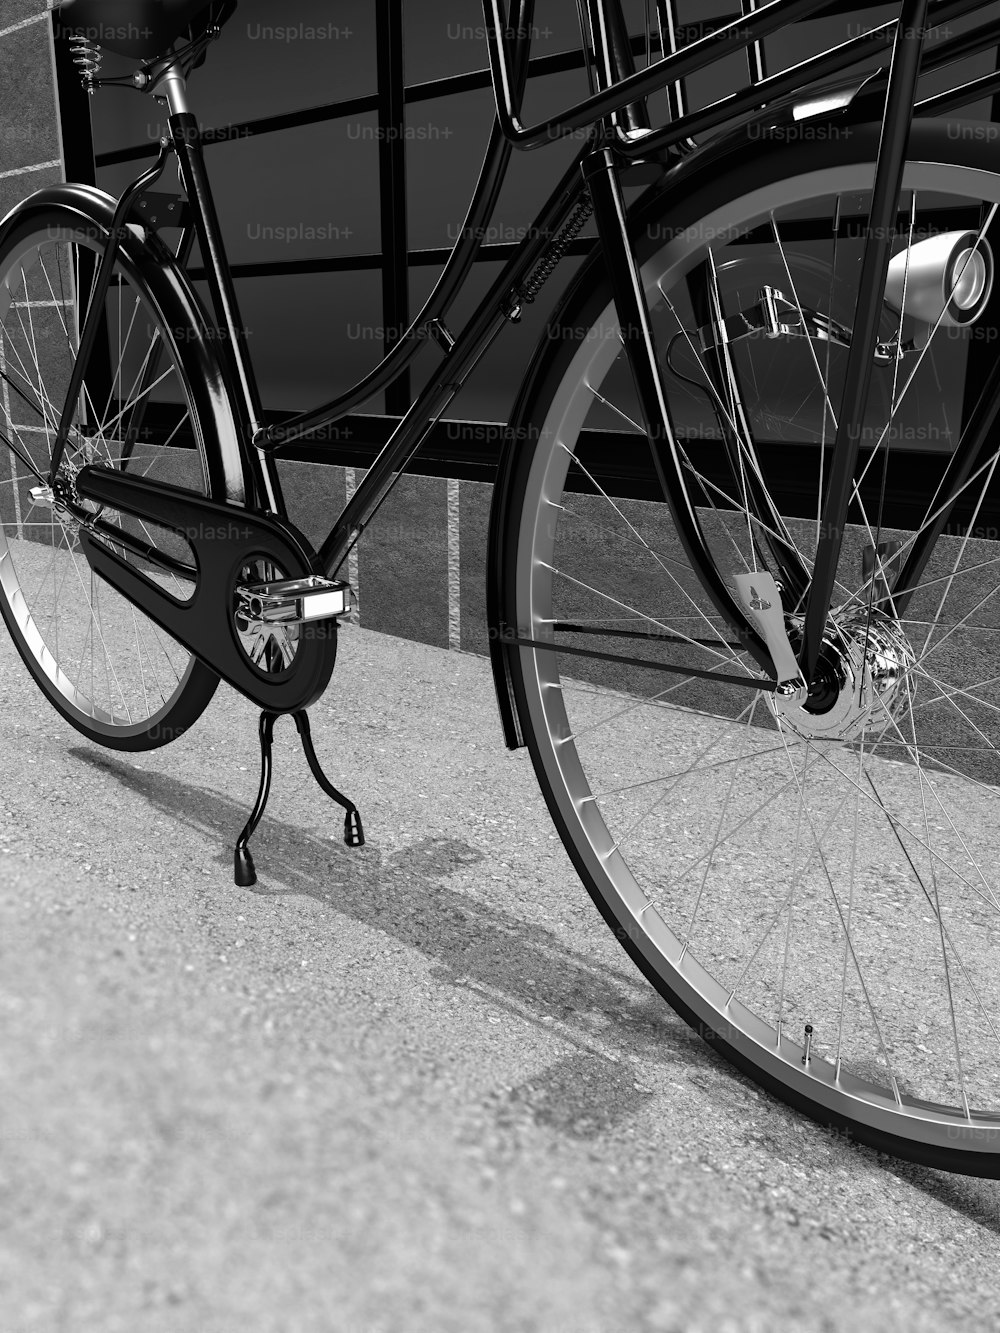 Una foto in bianco e nero di una bicicletta